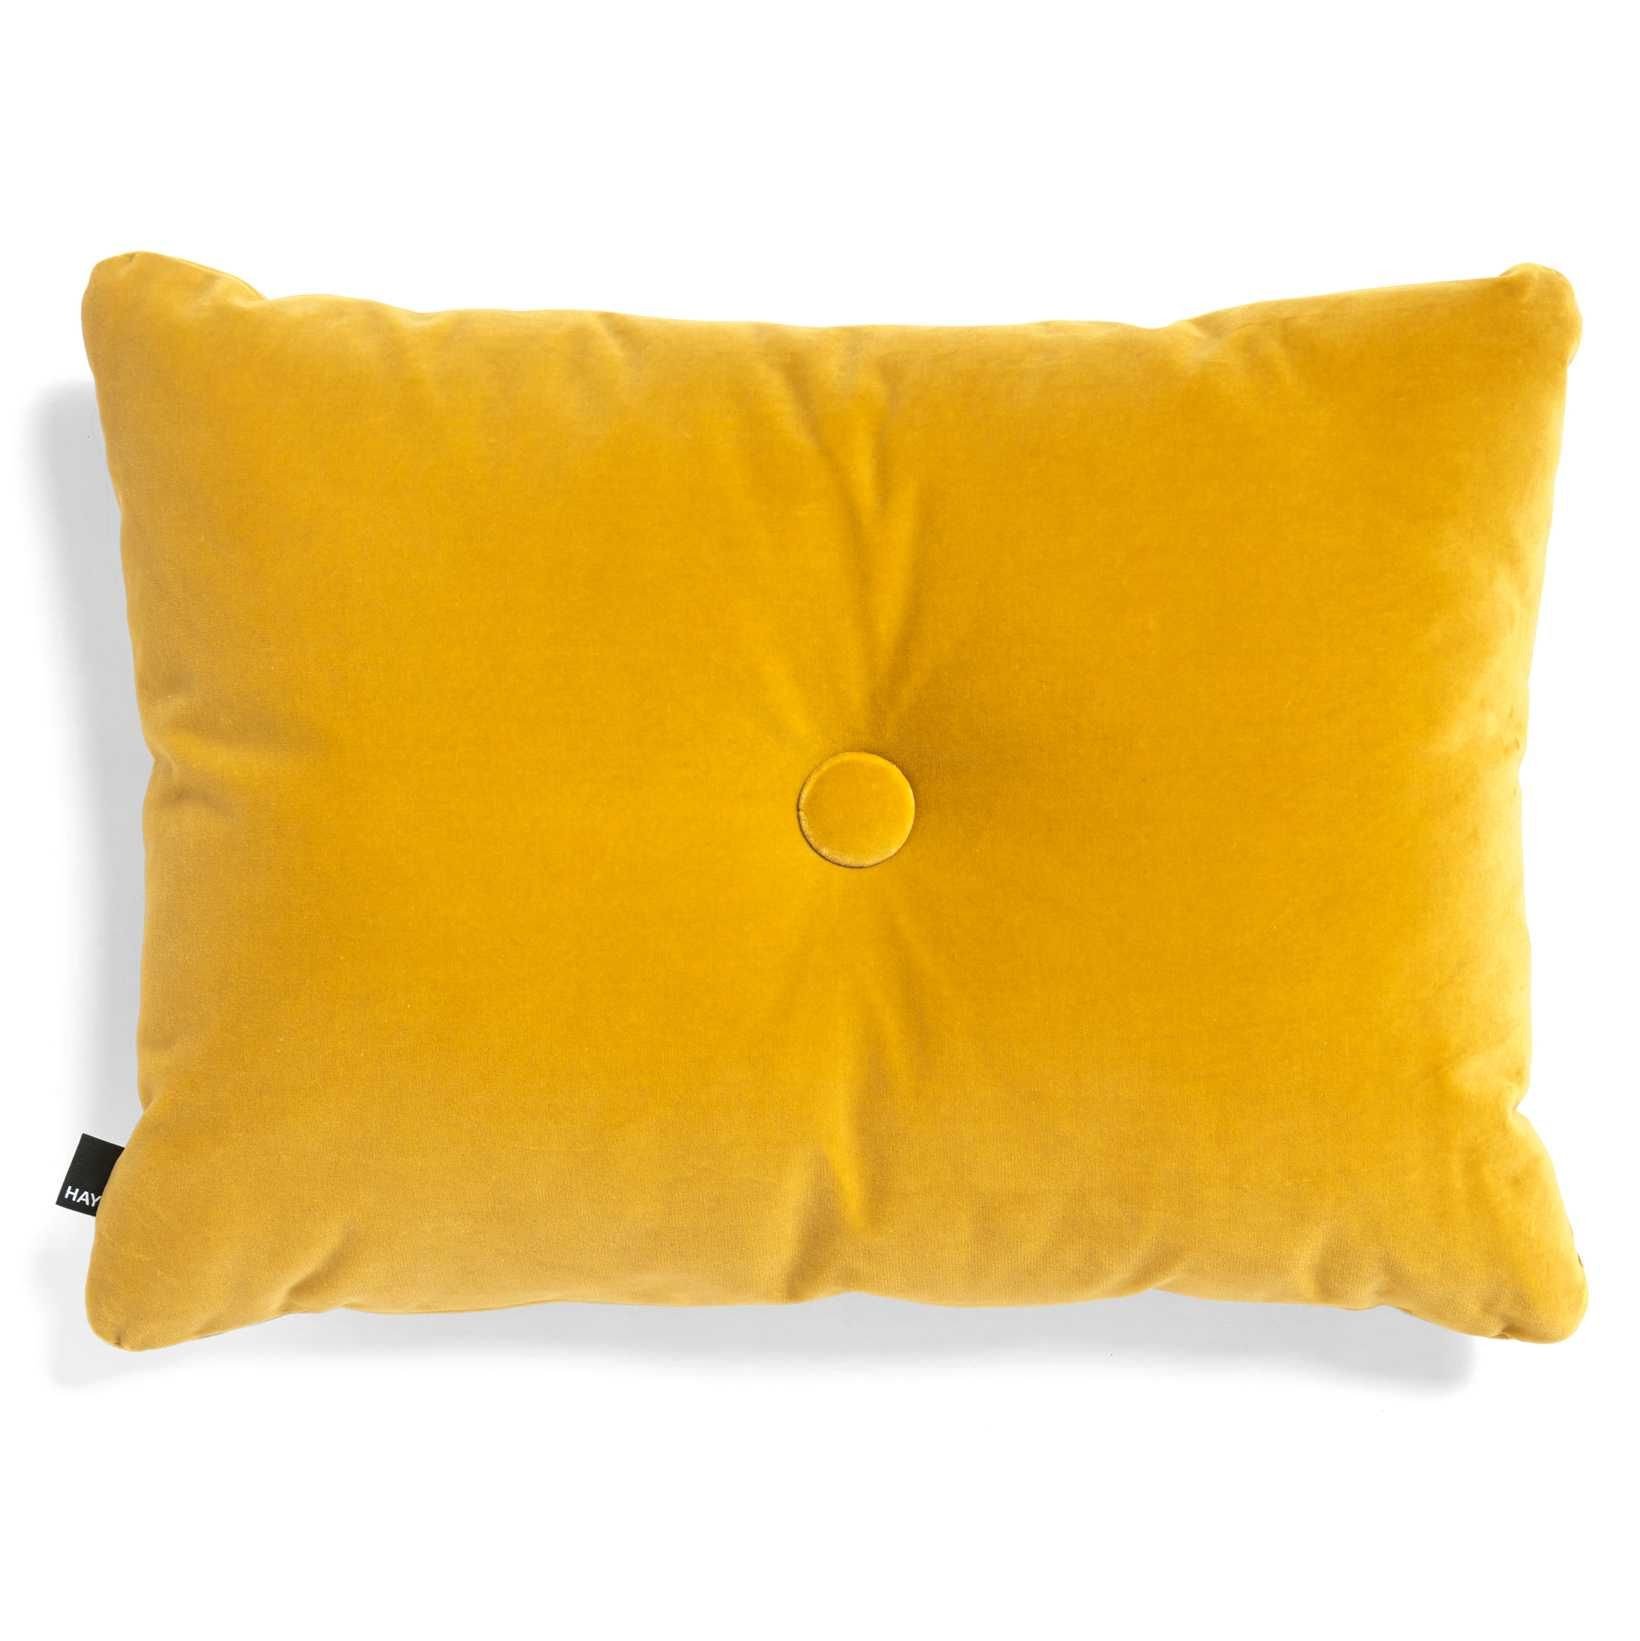 Hay Dot Cushion Soft kussen 60x45 geel | Flinders